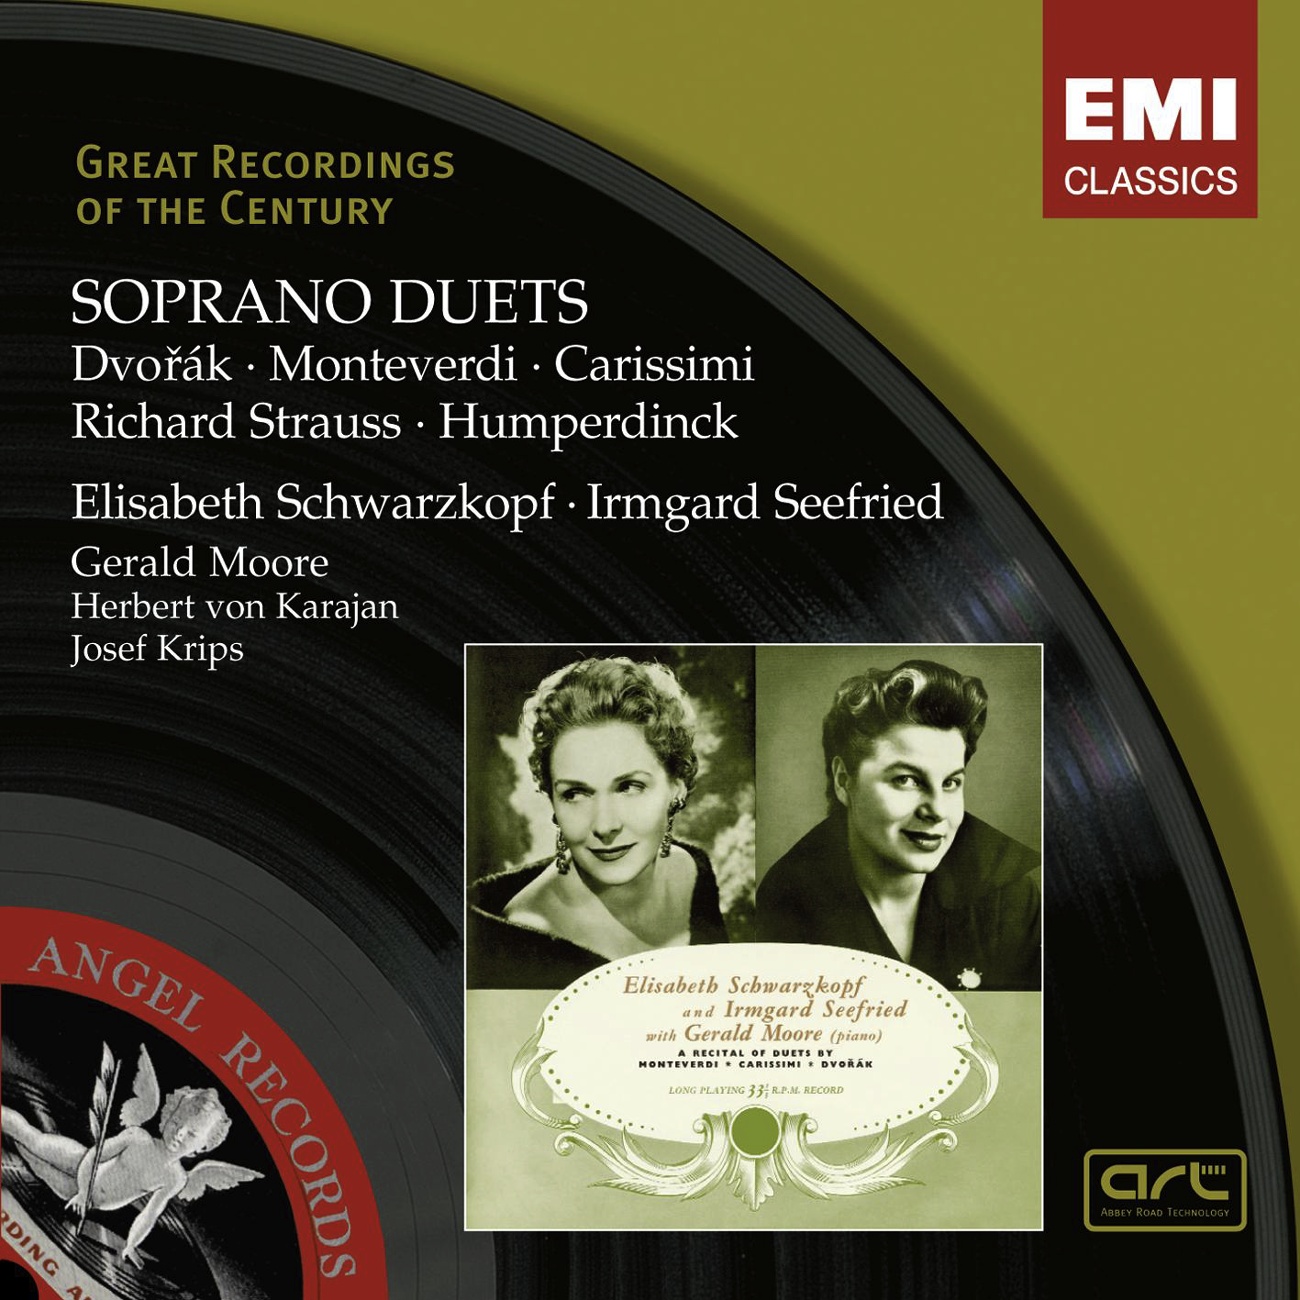 Der Rosenkavalier Op. 59 (2007 Digital Remaster): Herr Gott im Himmel! (Presentation of the Silver Rose) (Act 2)